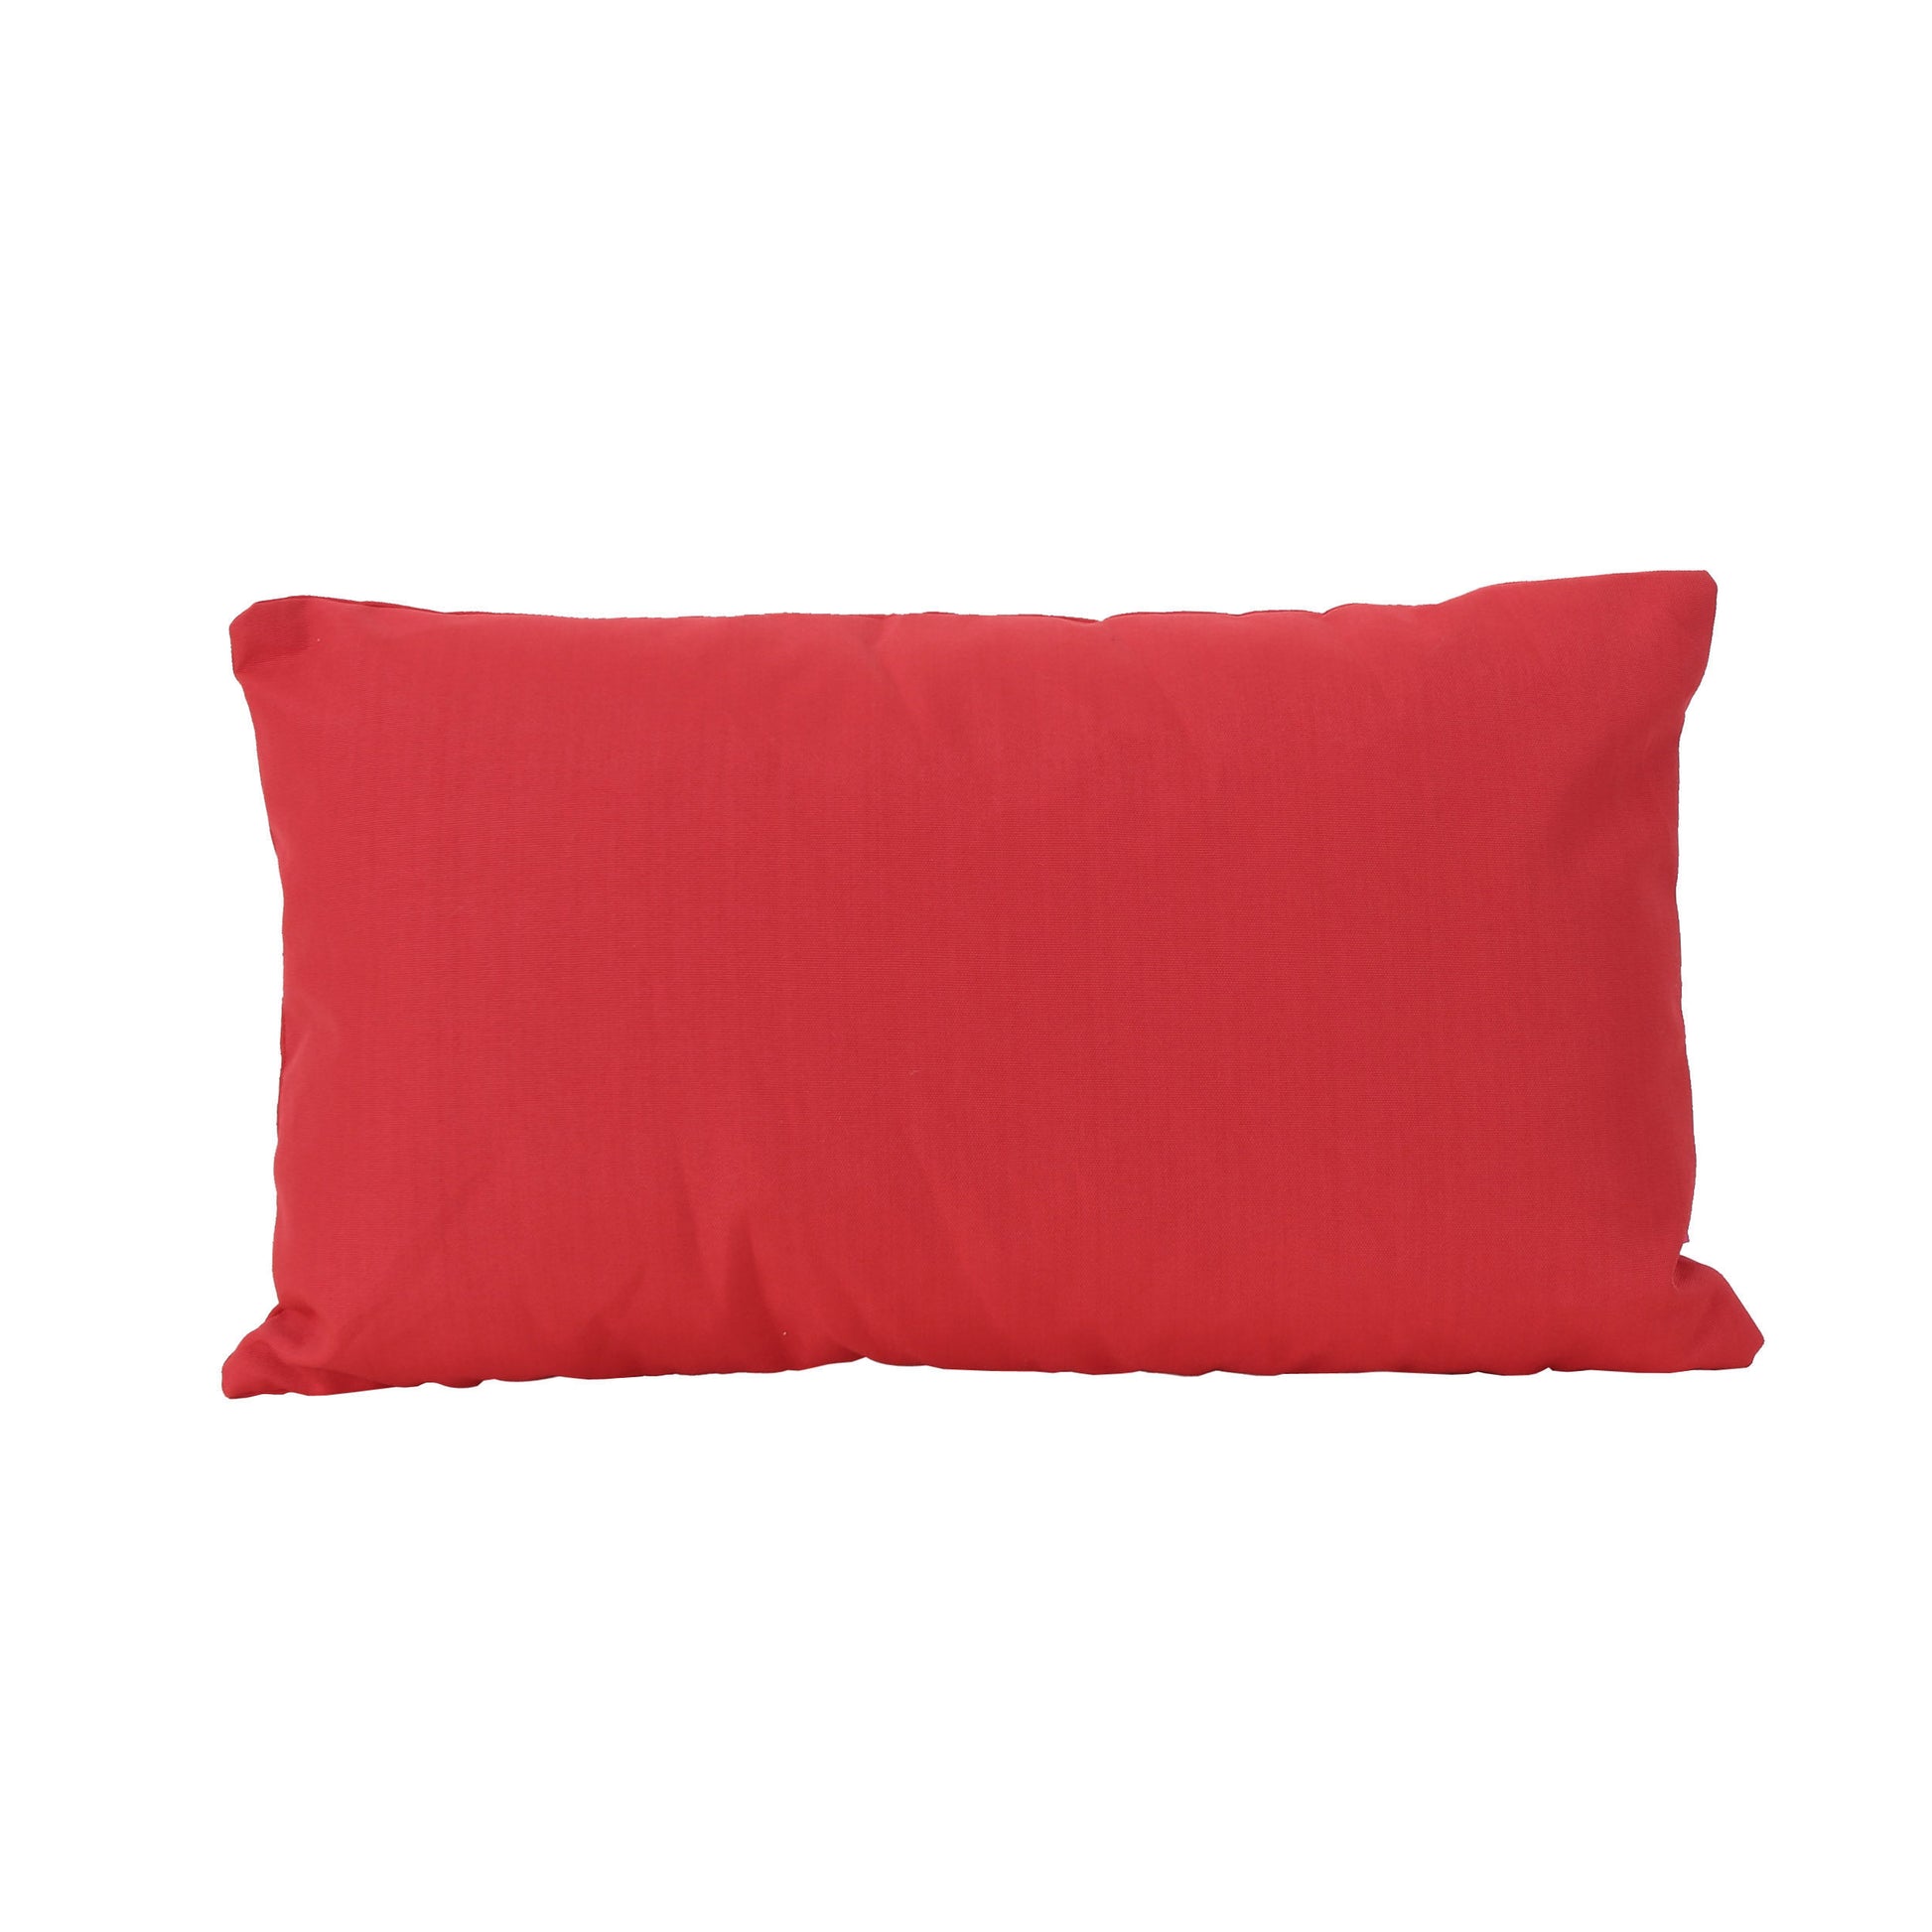 CORONADO RECTANGULAR PILLOW red-fabric